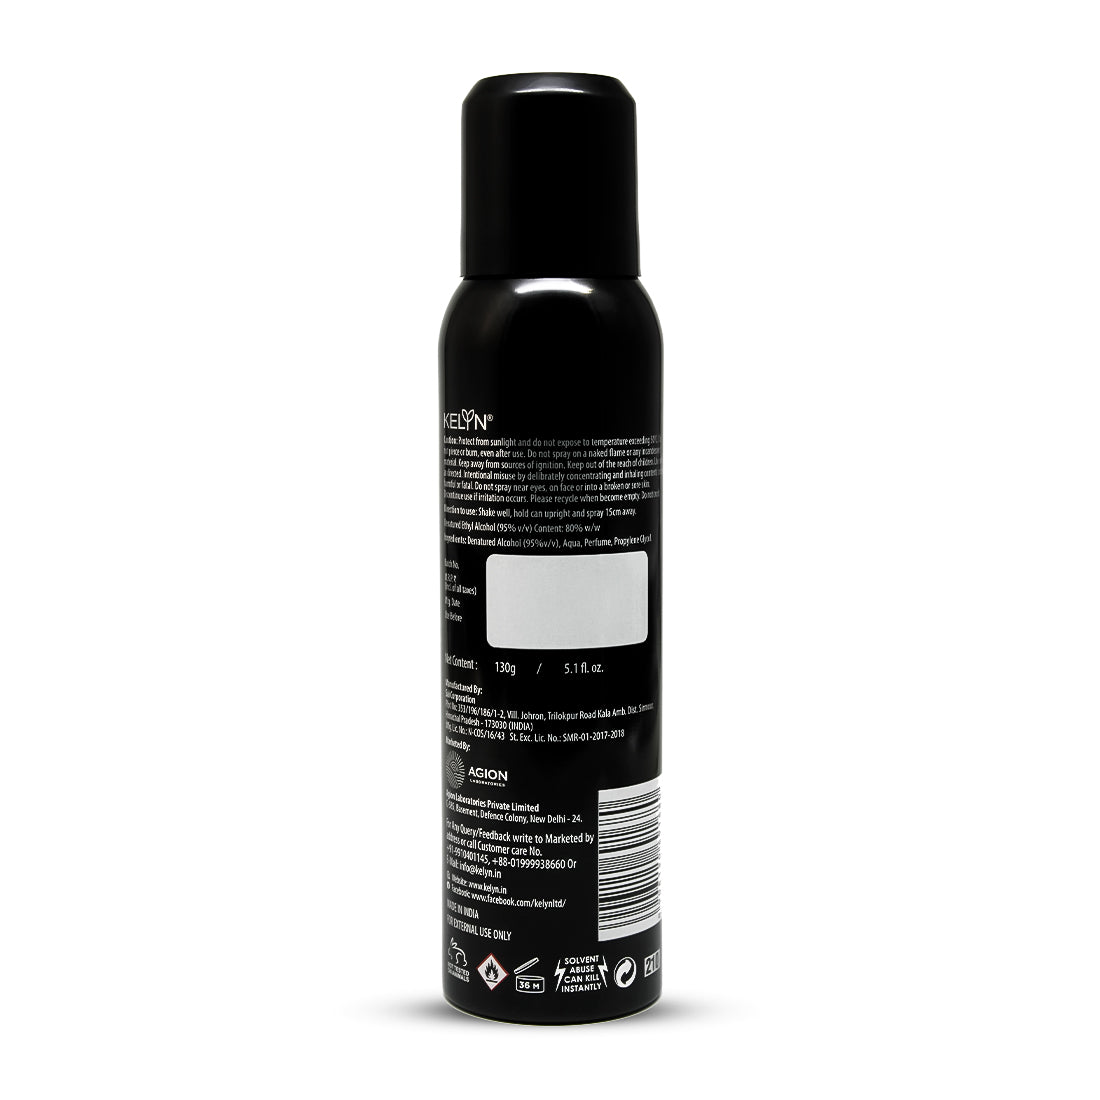 Kelyn Extreme, Royal Oudh No Gas Deodorant for Men Body Spray (Pack of 2) 150 ml each